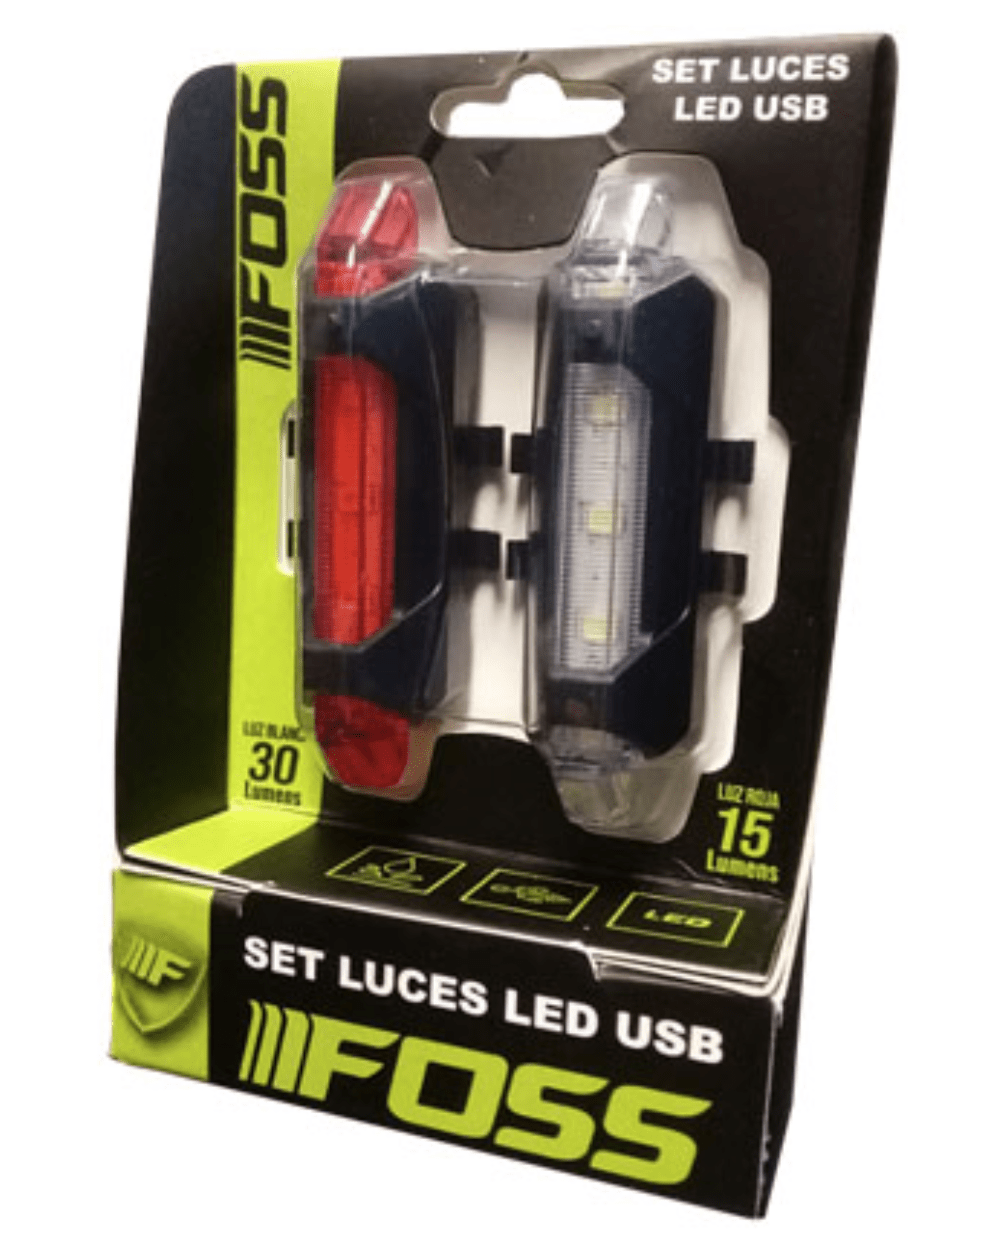 Set Luces Foss Led USB 30-15 Lumenes – ADRENALINA SPORT